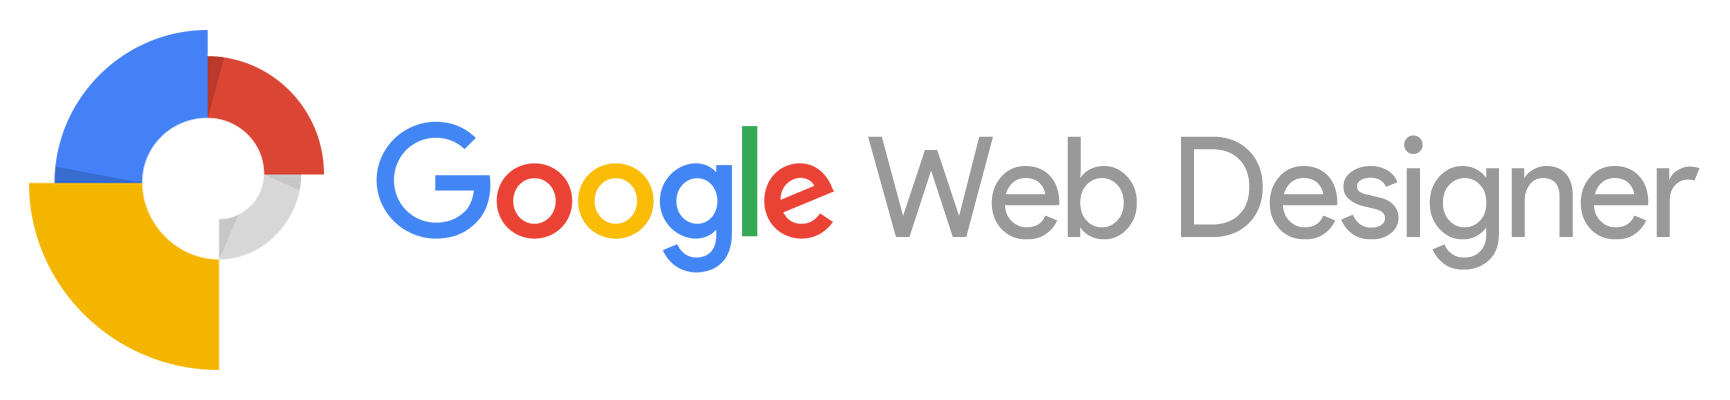 Google Web Logo - Web design Logos